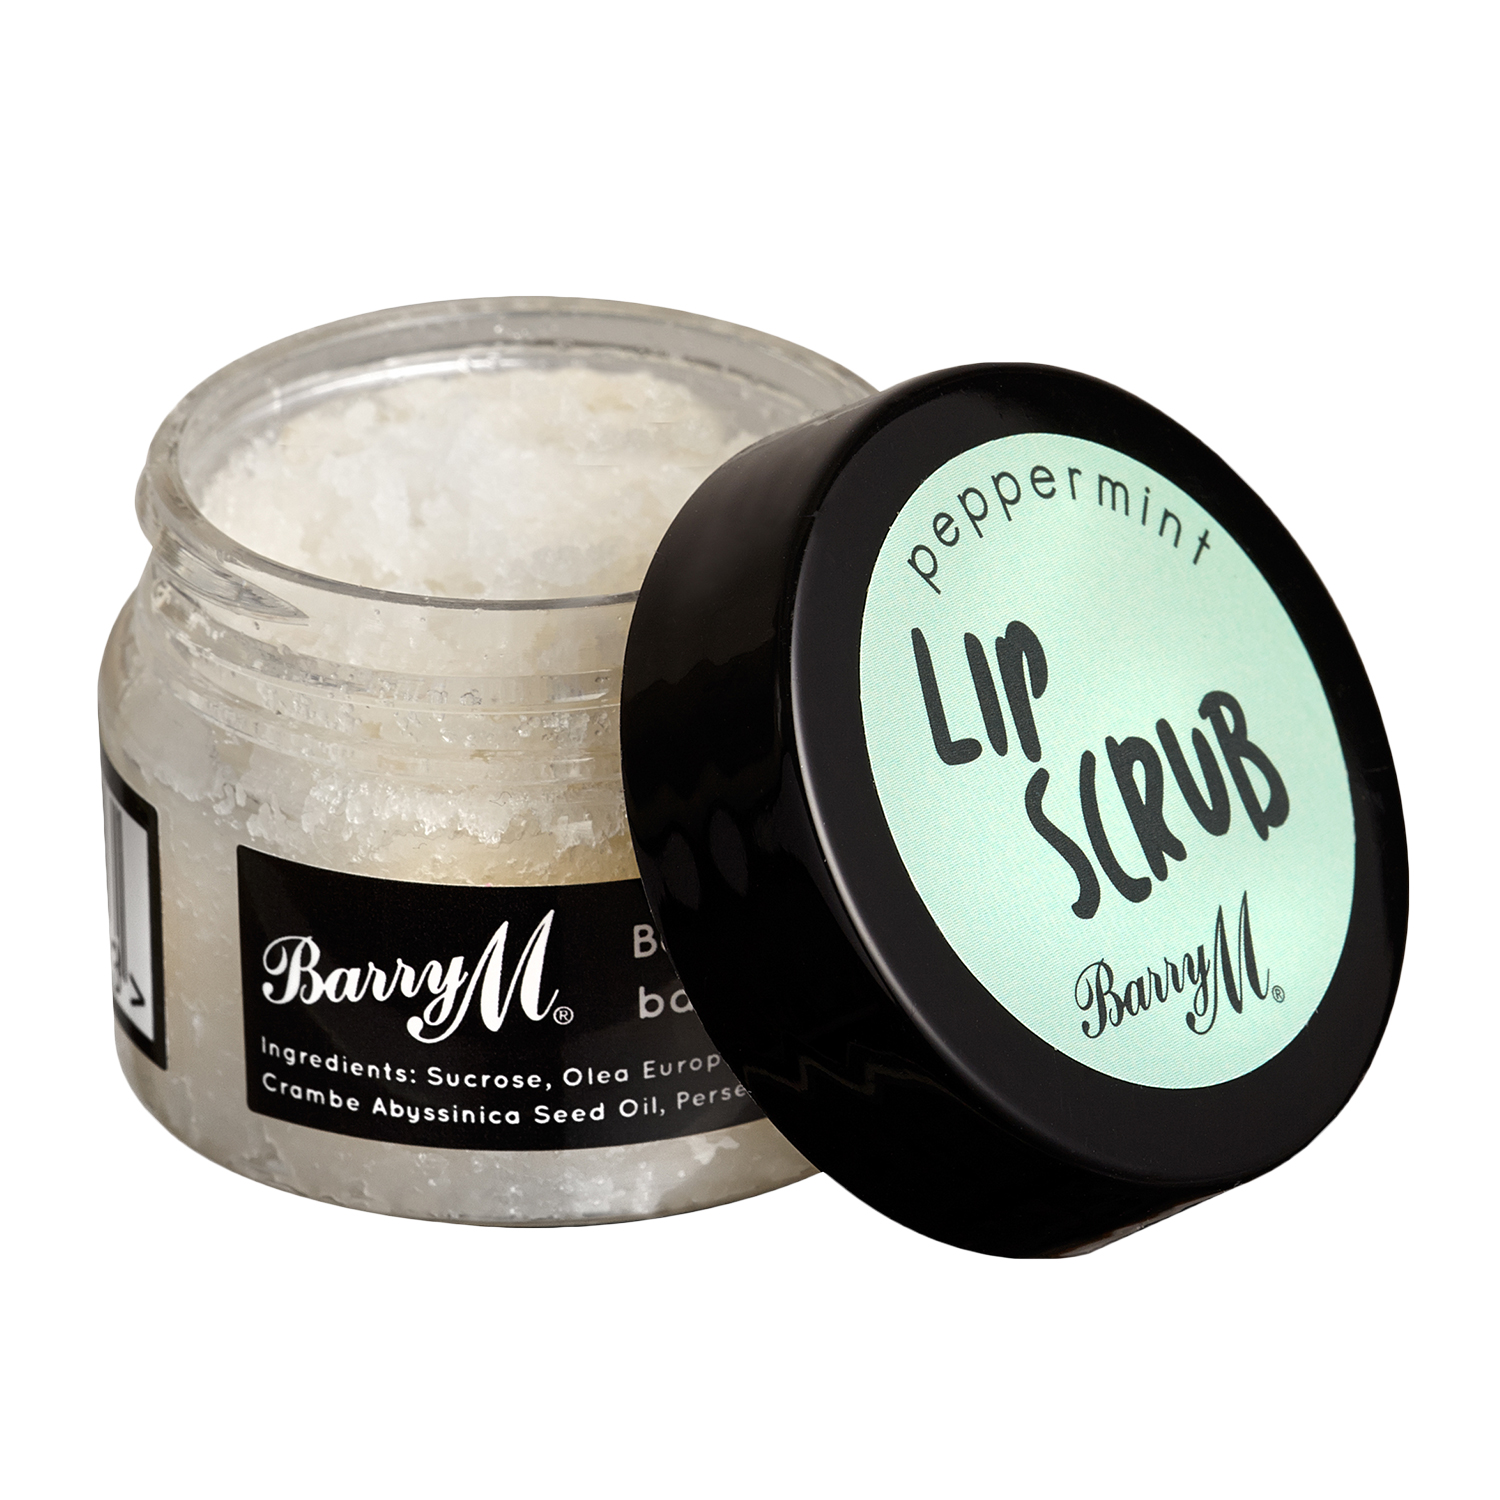 Barry M - Lip Scrub Peppermint - Peppermint Flavoured Lips